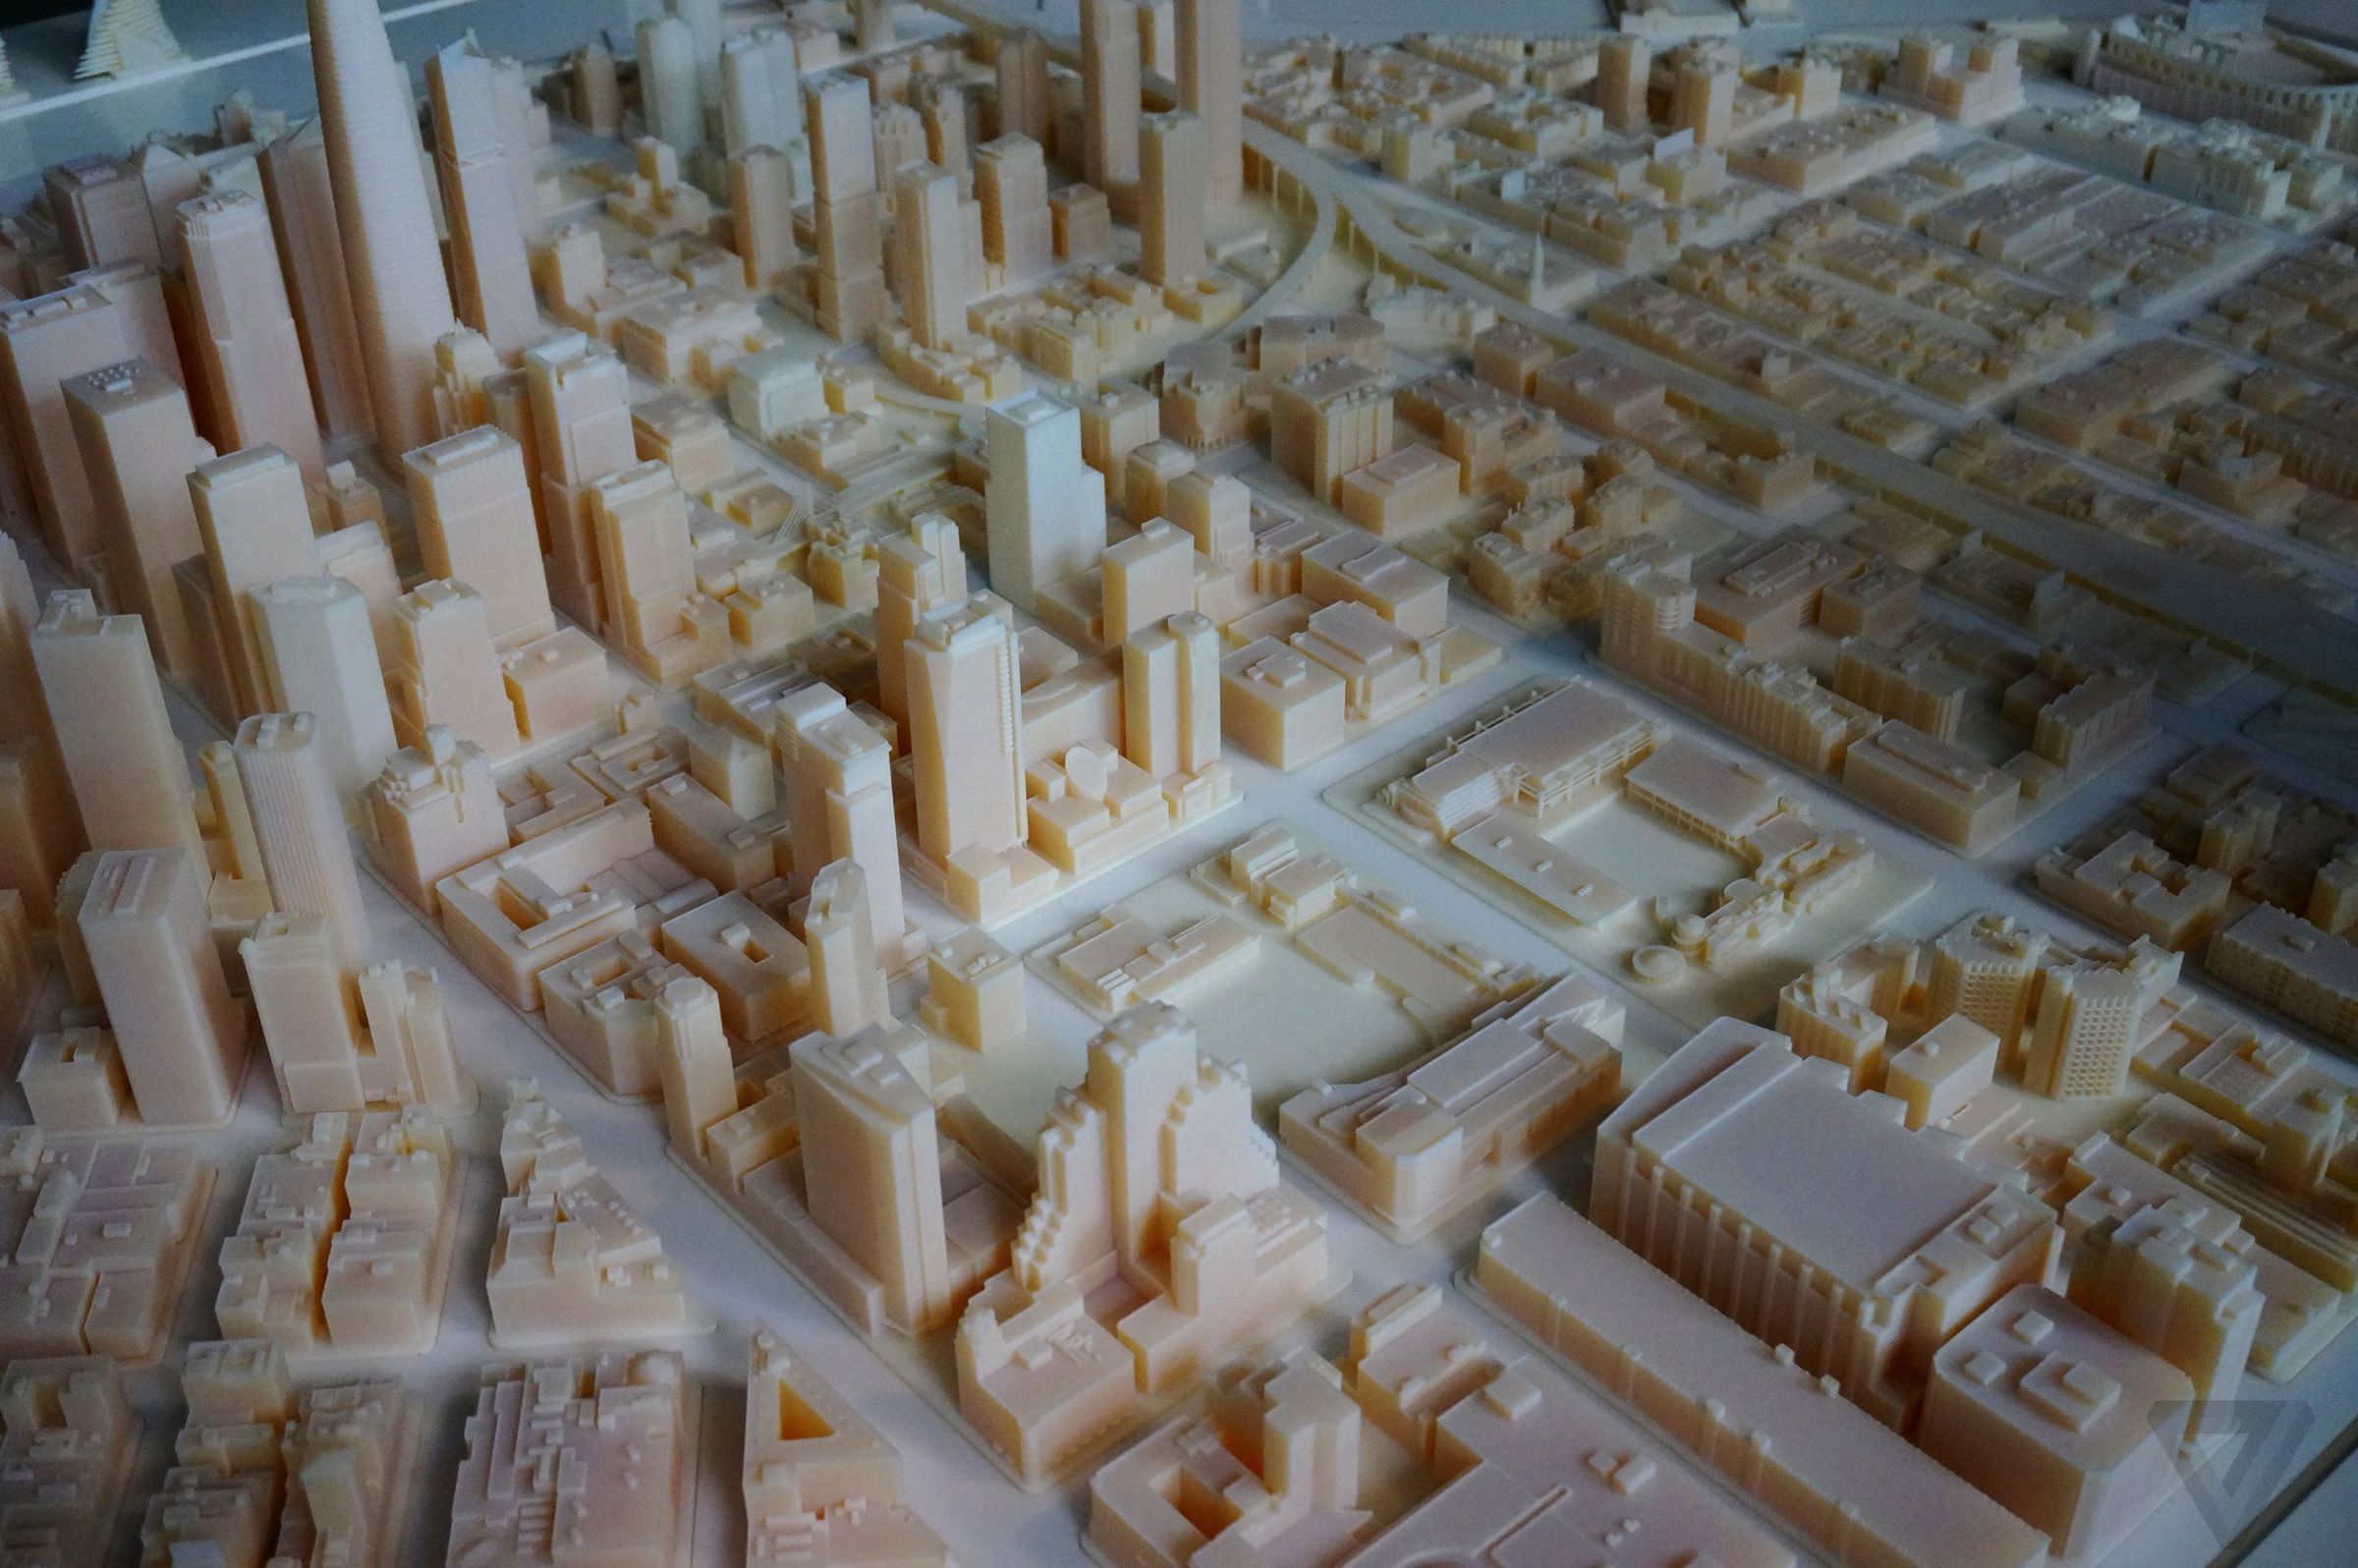 Autodesk's huge 3D printed map of San Francisco